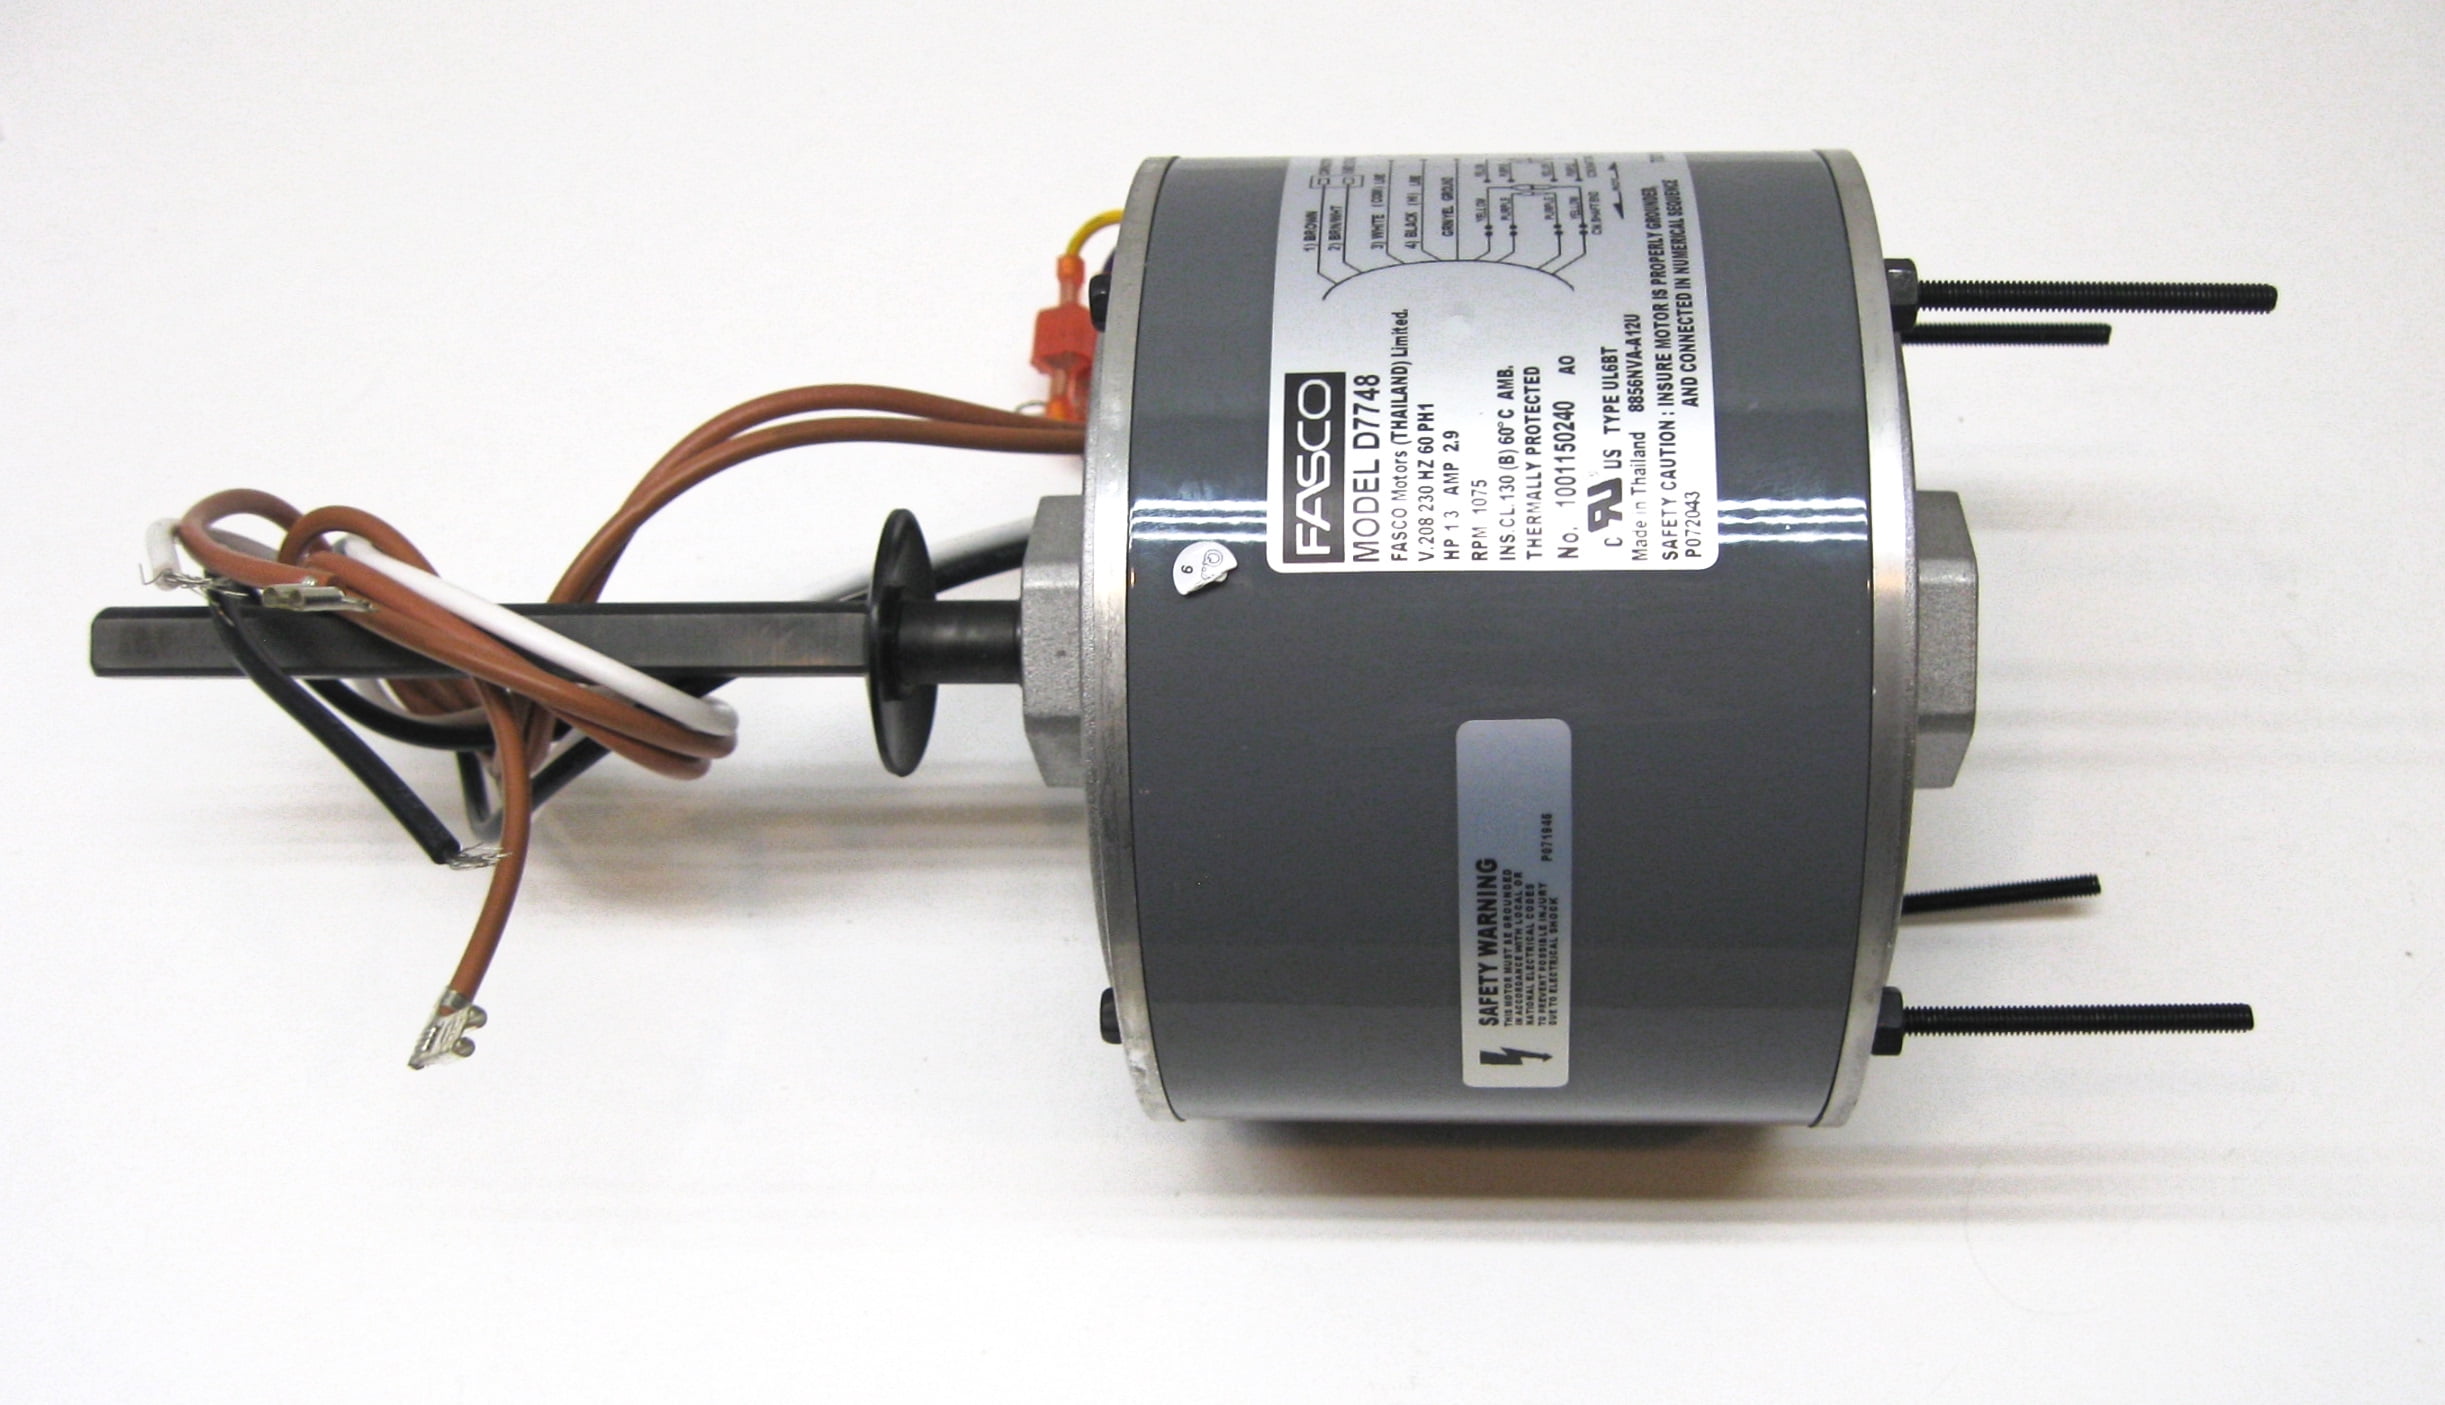 Condenser Evaporator Fan Motor Round CCW 6W 1300/1550 RPM LI 230V 